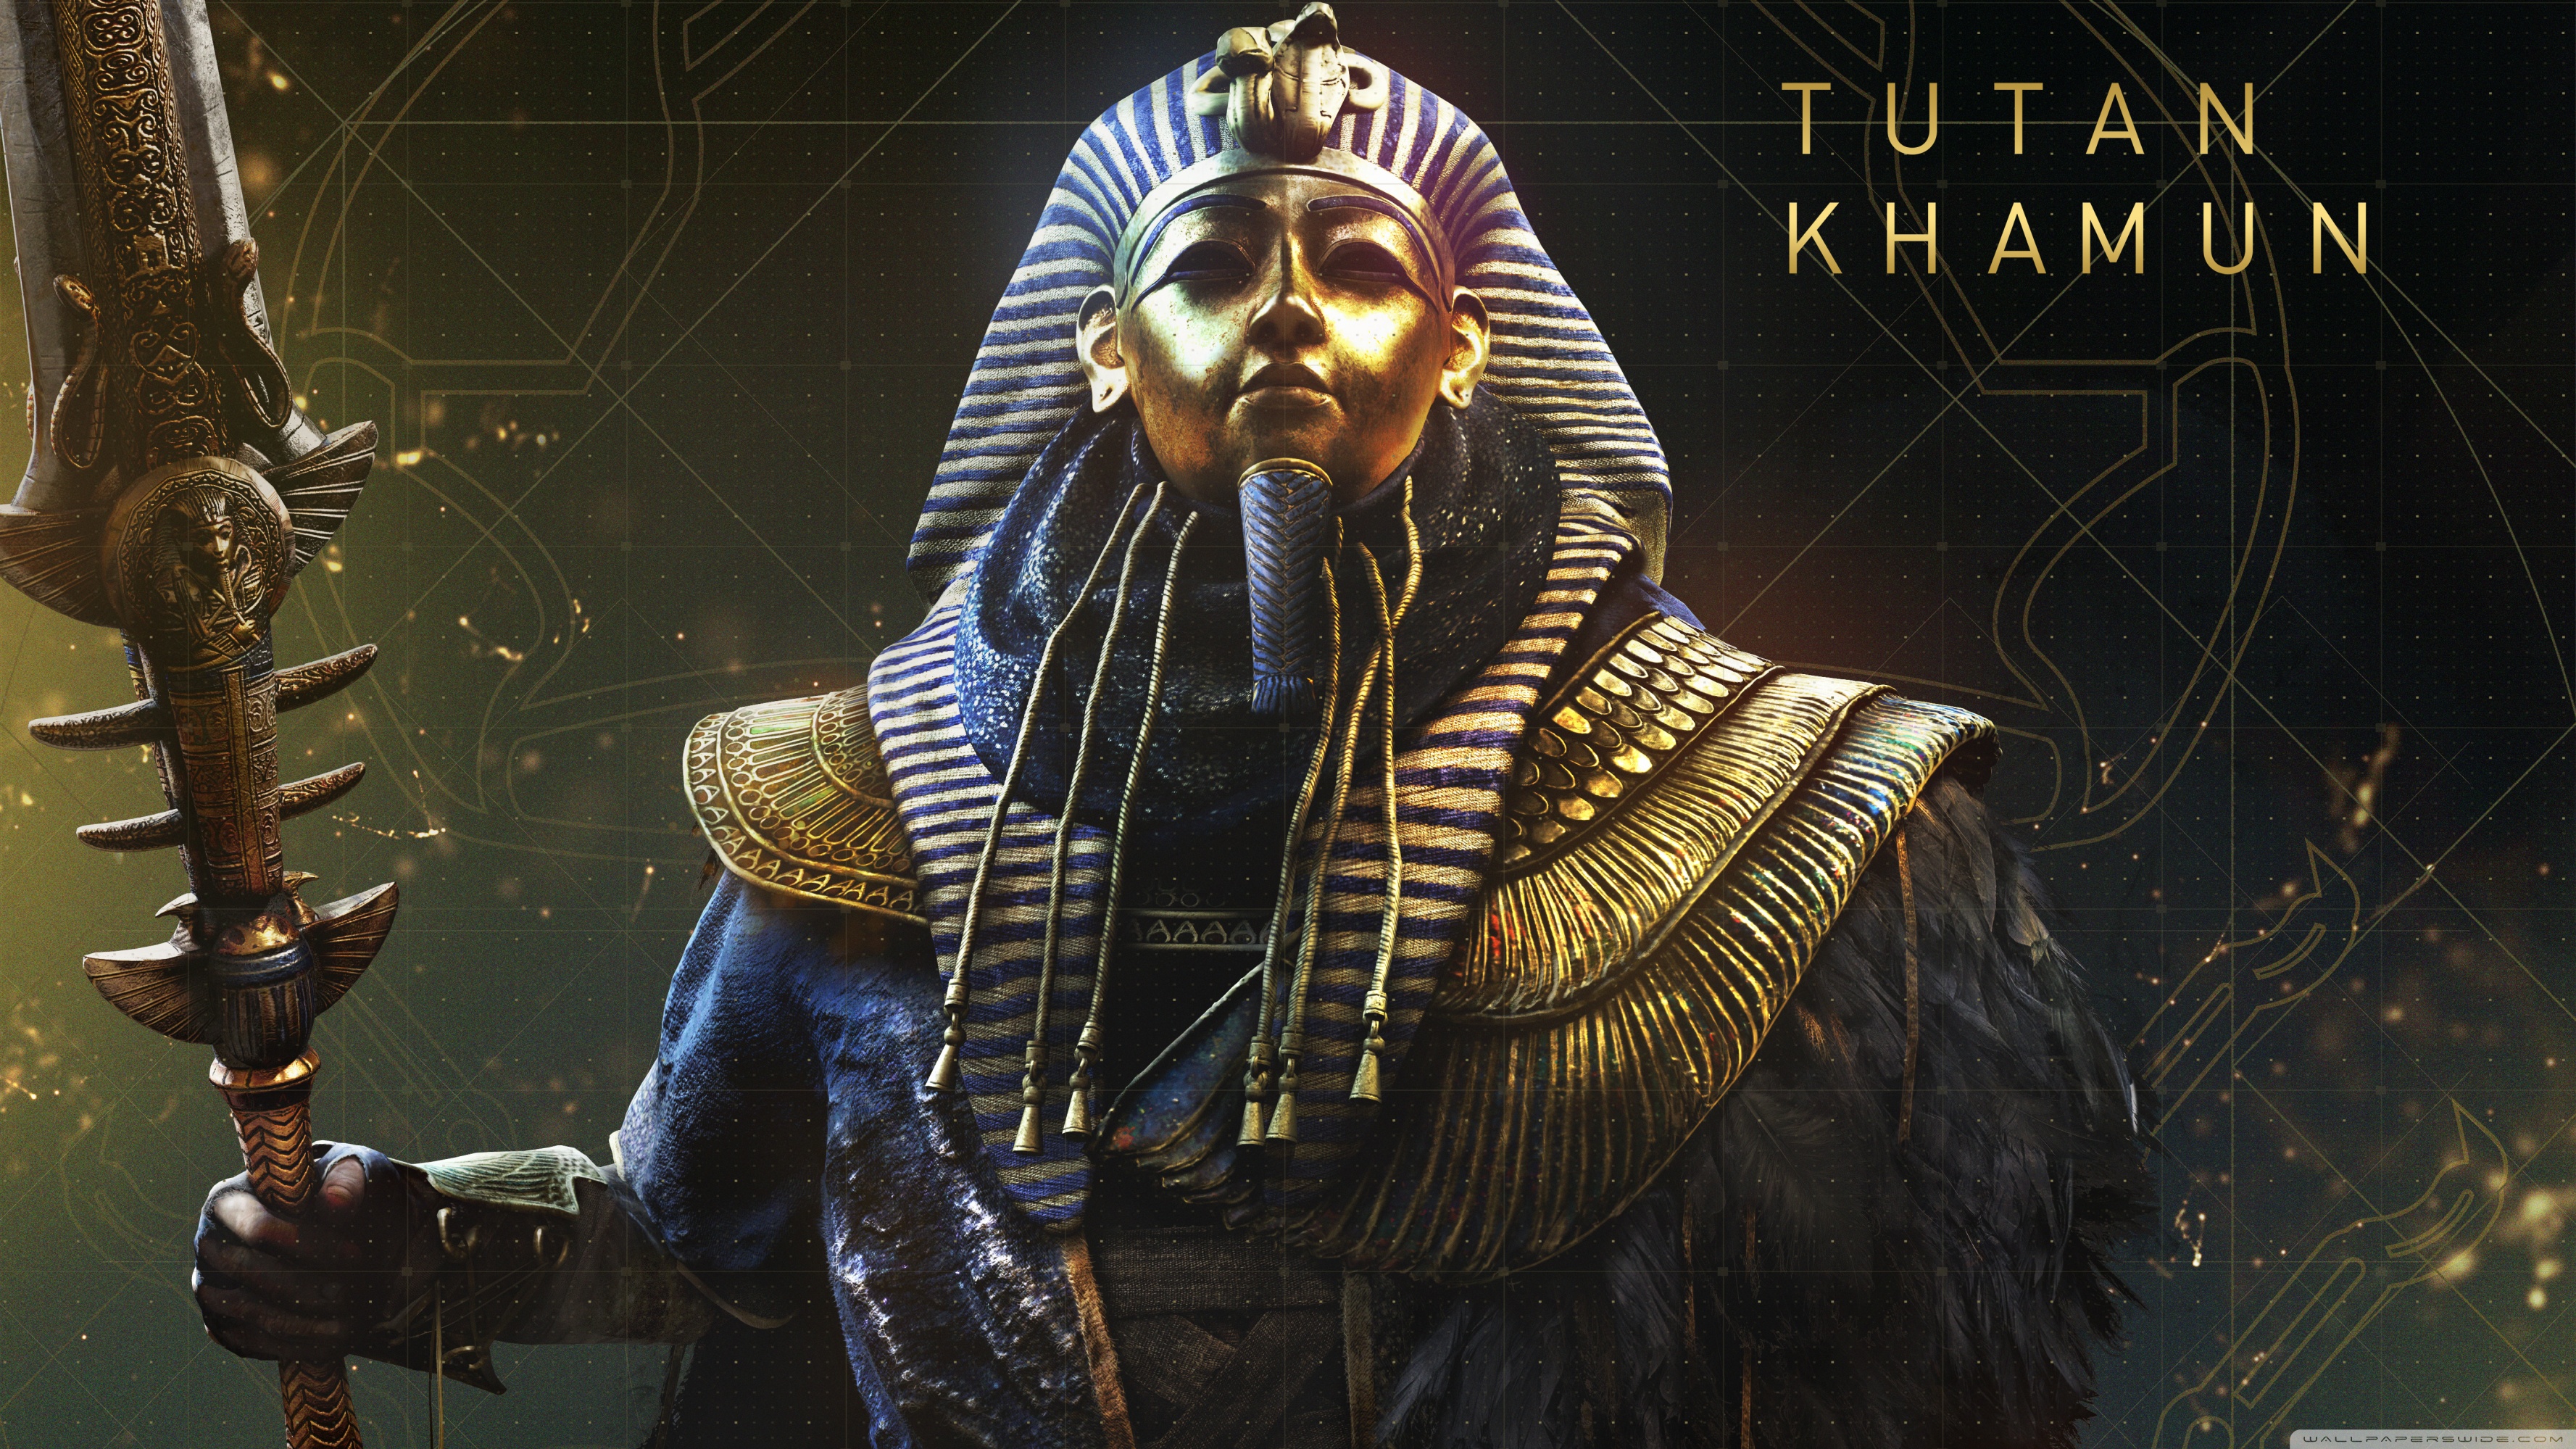 Assassin's Creed Origins The Curse Of The Pharaohs Tutankhamun Ultra HD ...